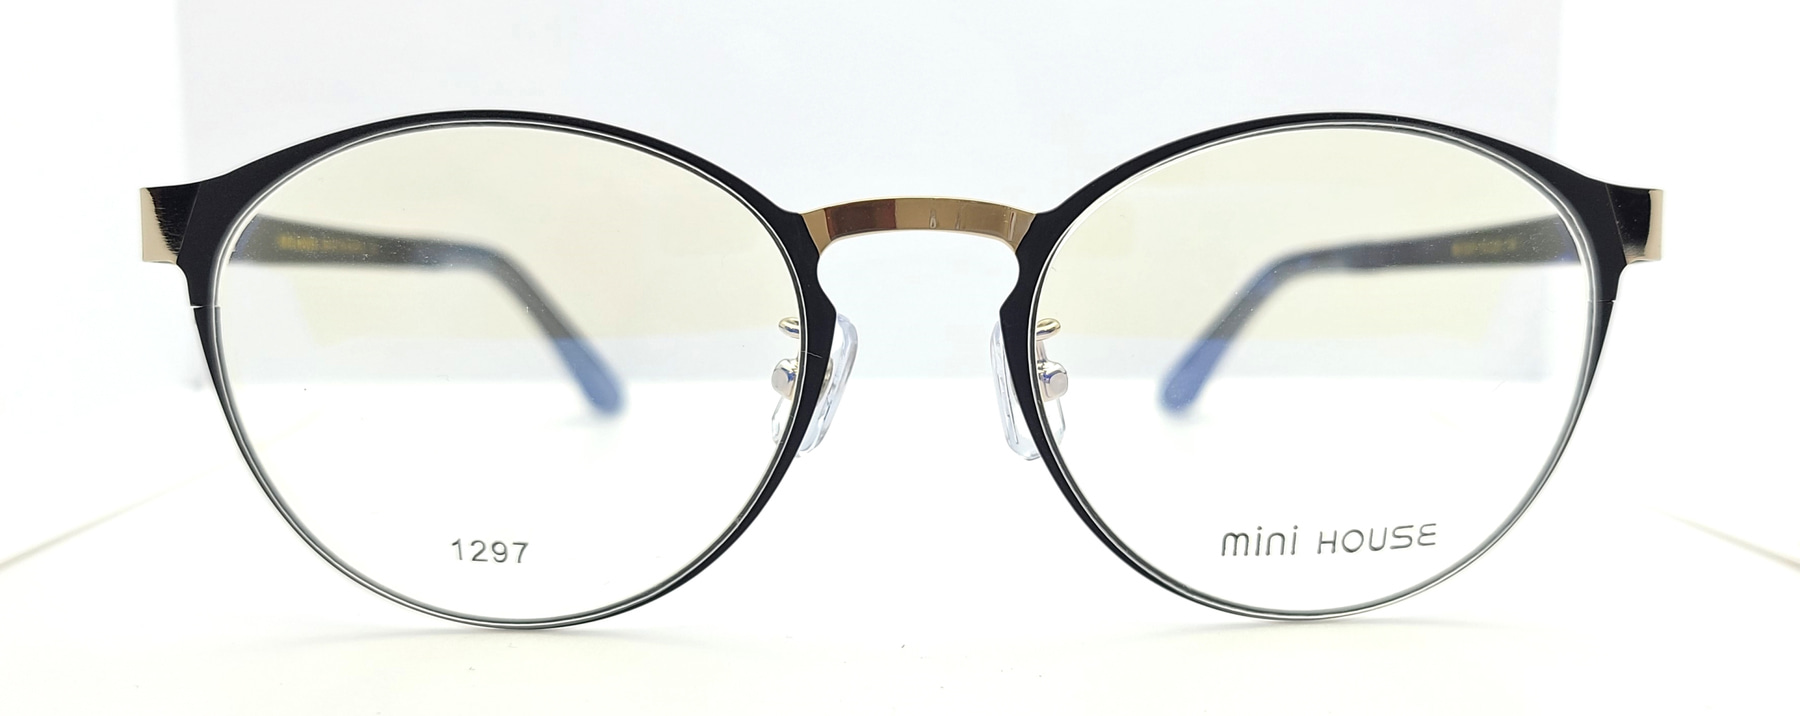 MINIHOUSE M-1297, Korean glasses, sunglasses, eyeglasses, glasses